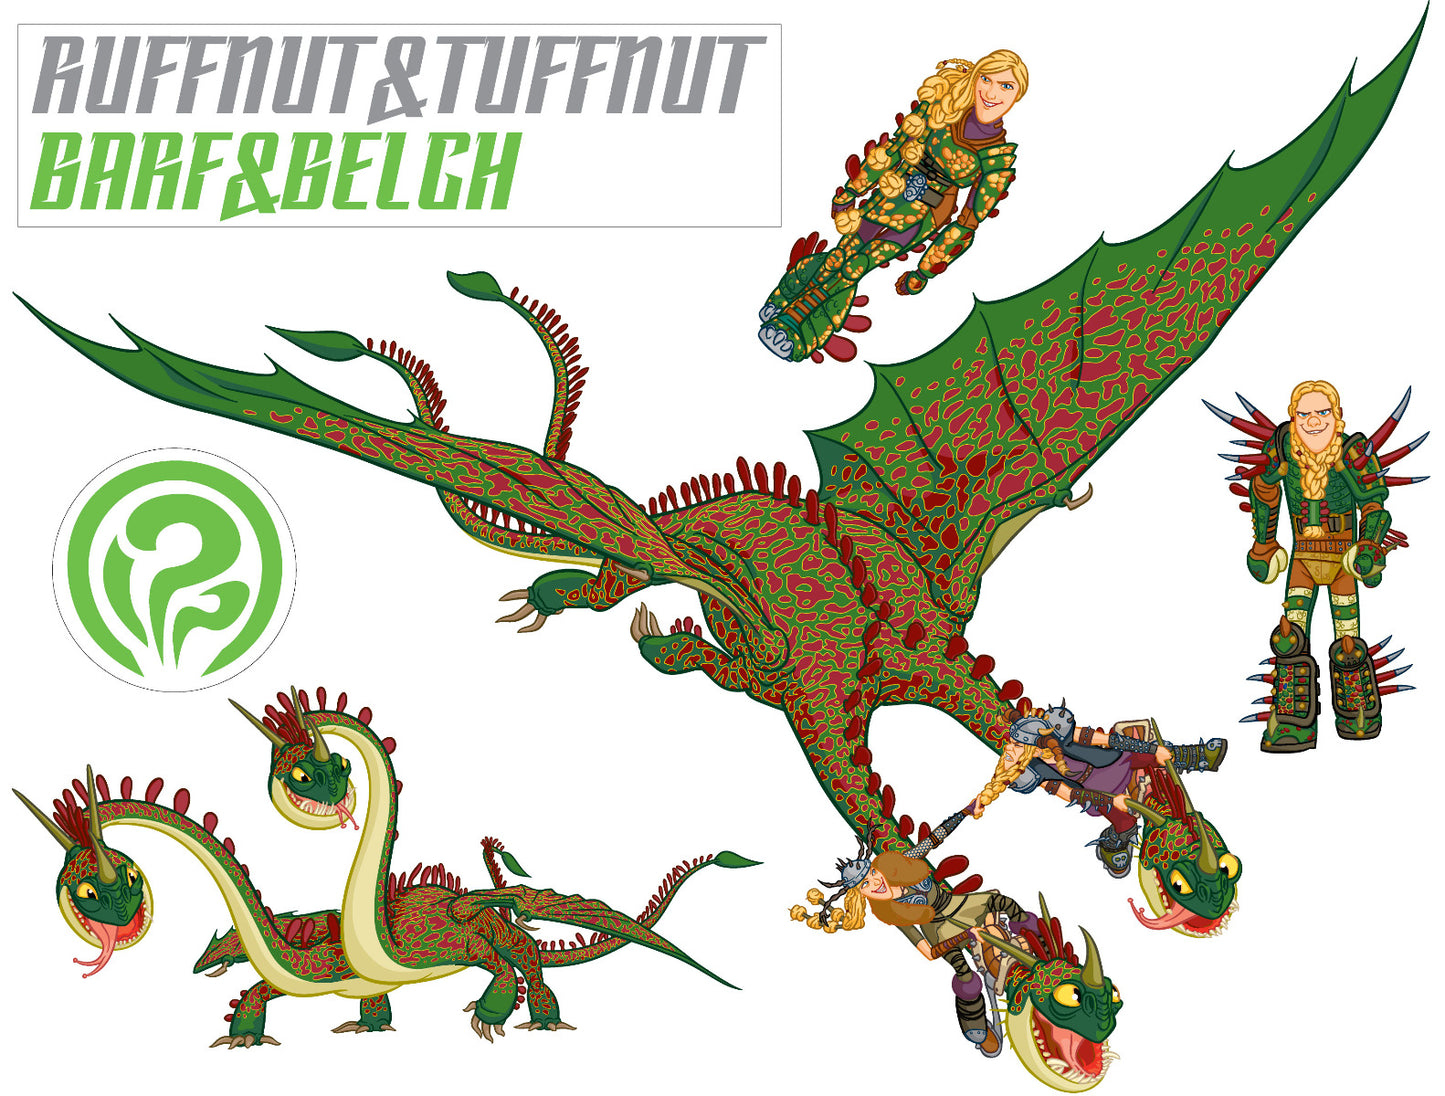 How To Train Your Dragon - Ruffnut & Tuffnut + Barf & Belch Wall Sticker Set